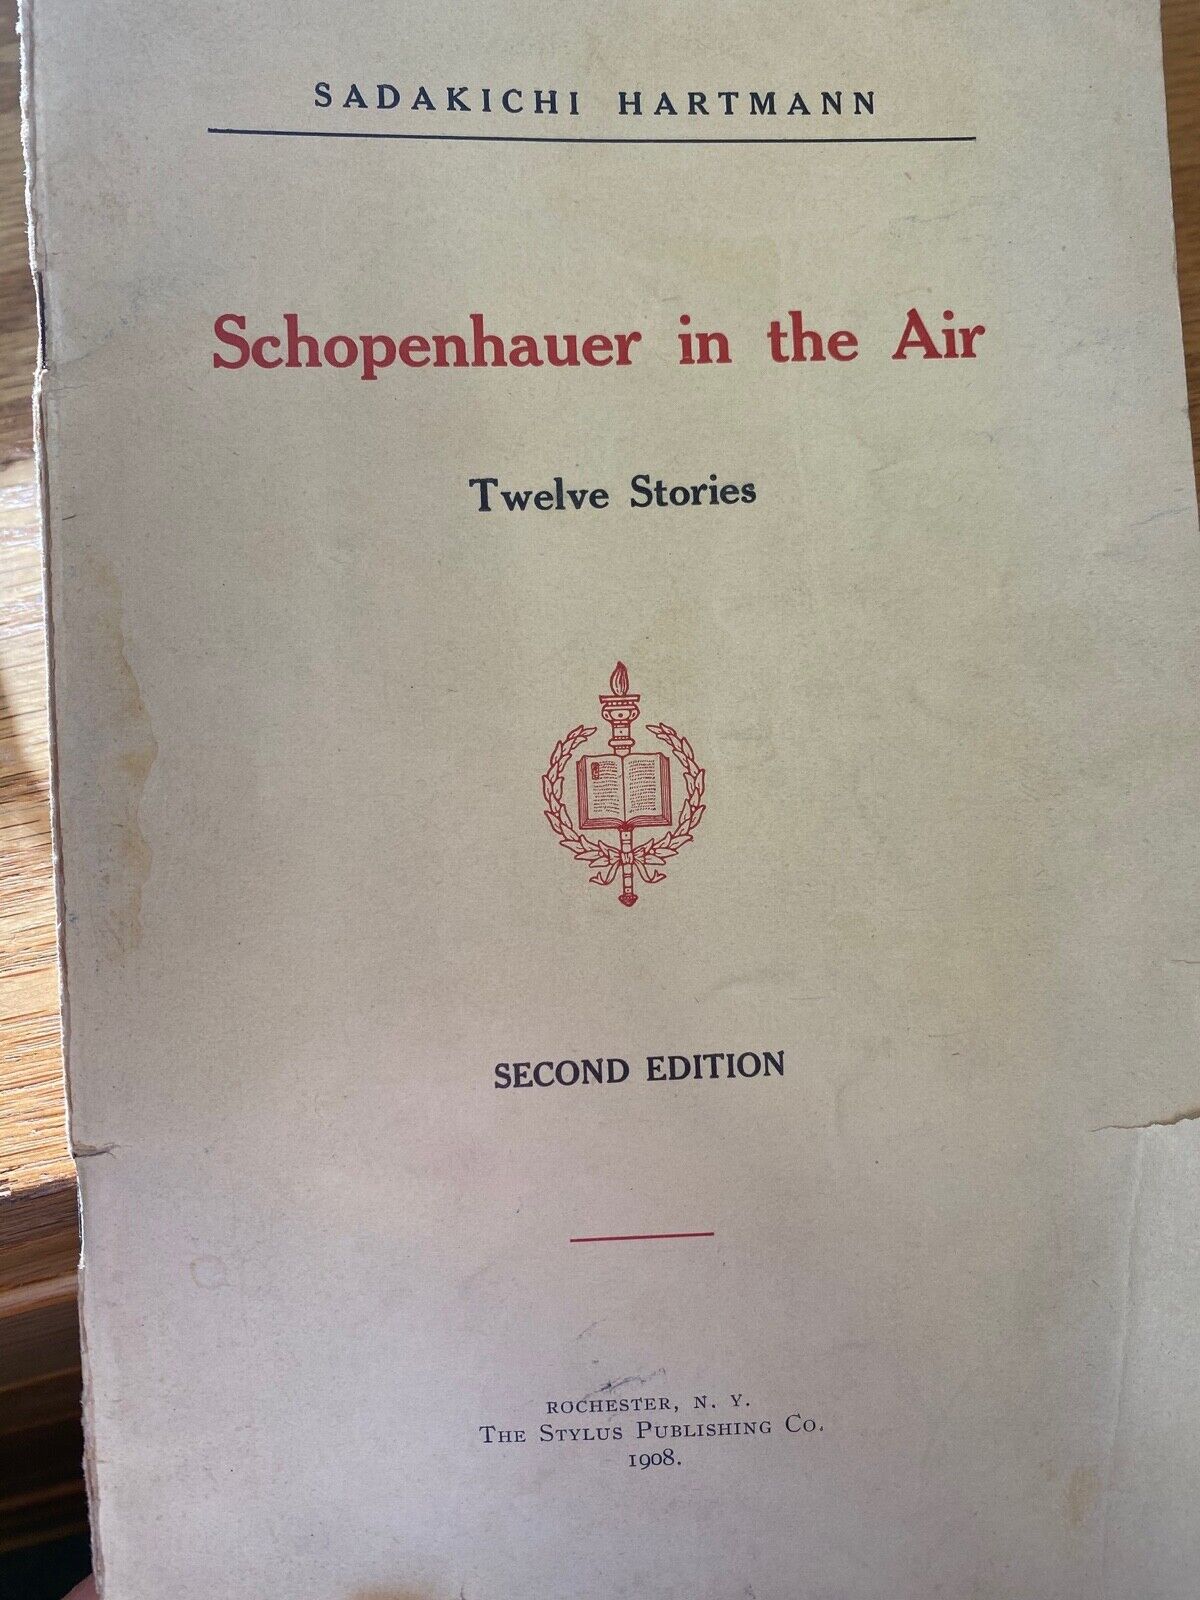 HARTMANN SCHOPENHAUER 1908  The scarce 1908 second edition of Sadakichi Hartmann